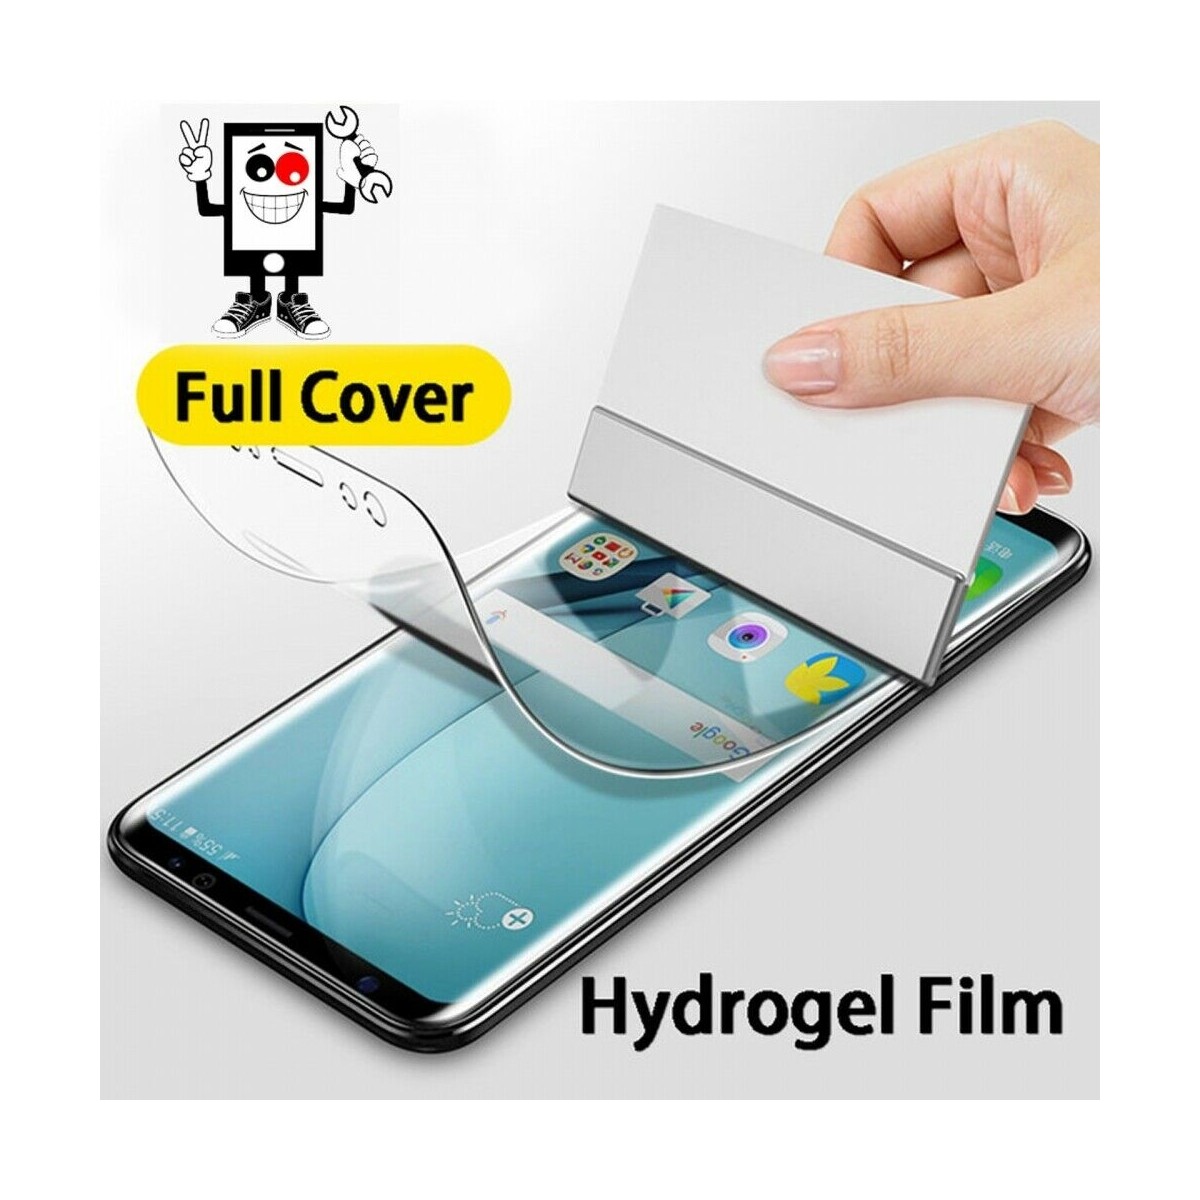 Protector de Pantalla Autorreparable de Hidrogel para LG X Screen